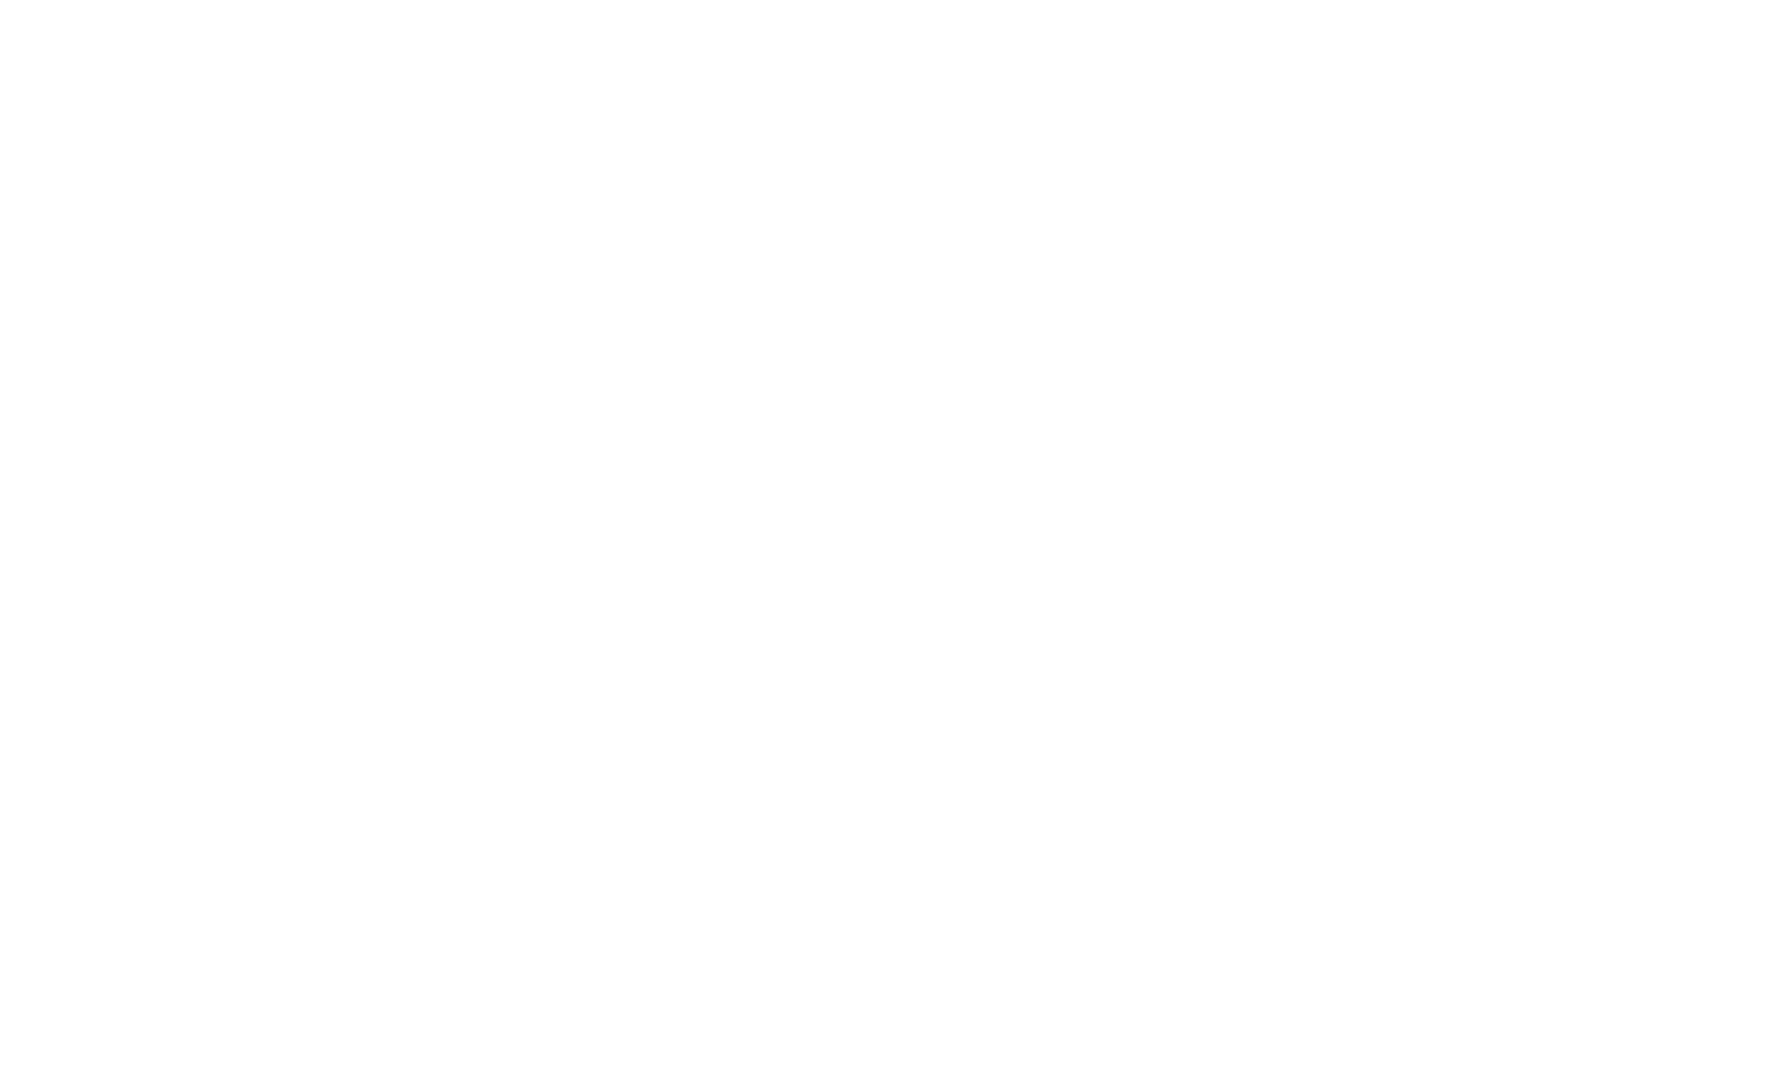 Racing Generation